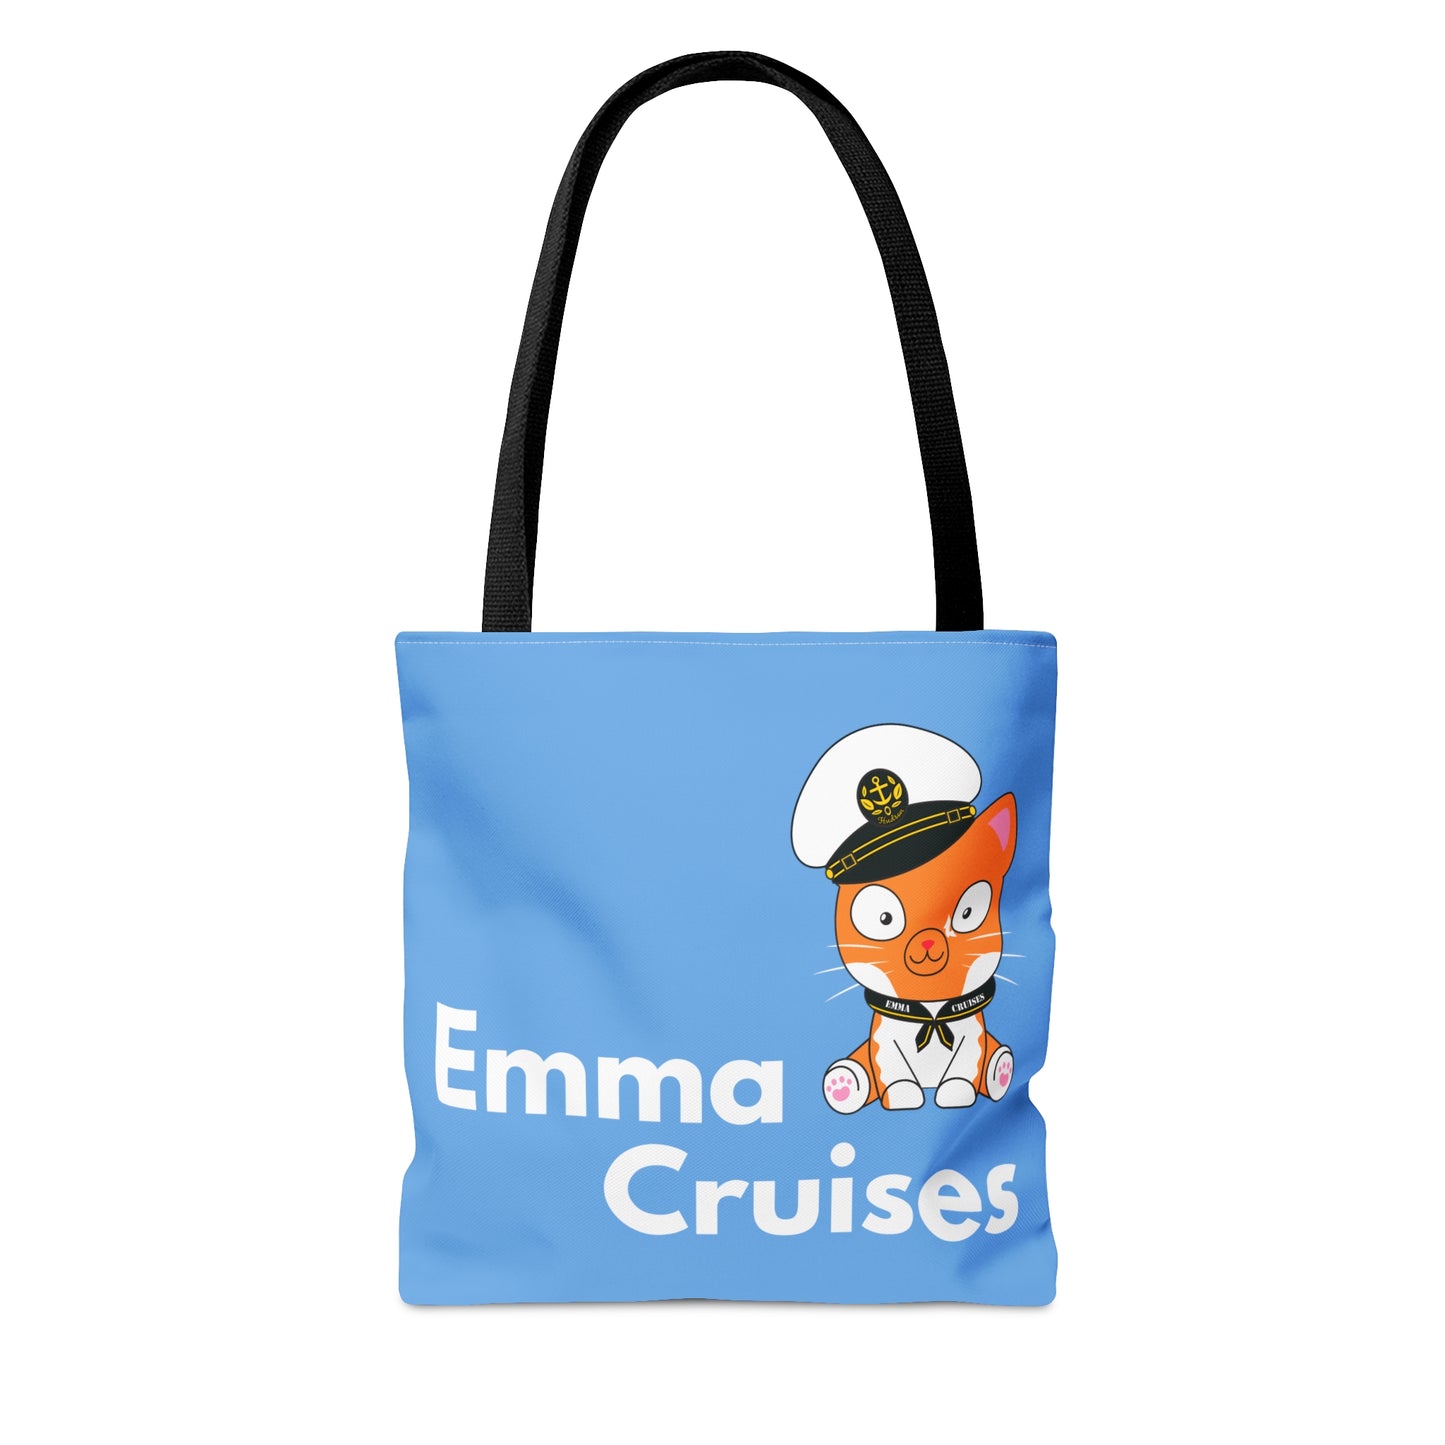 Emma Cruises - Bag